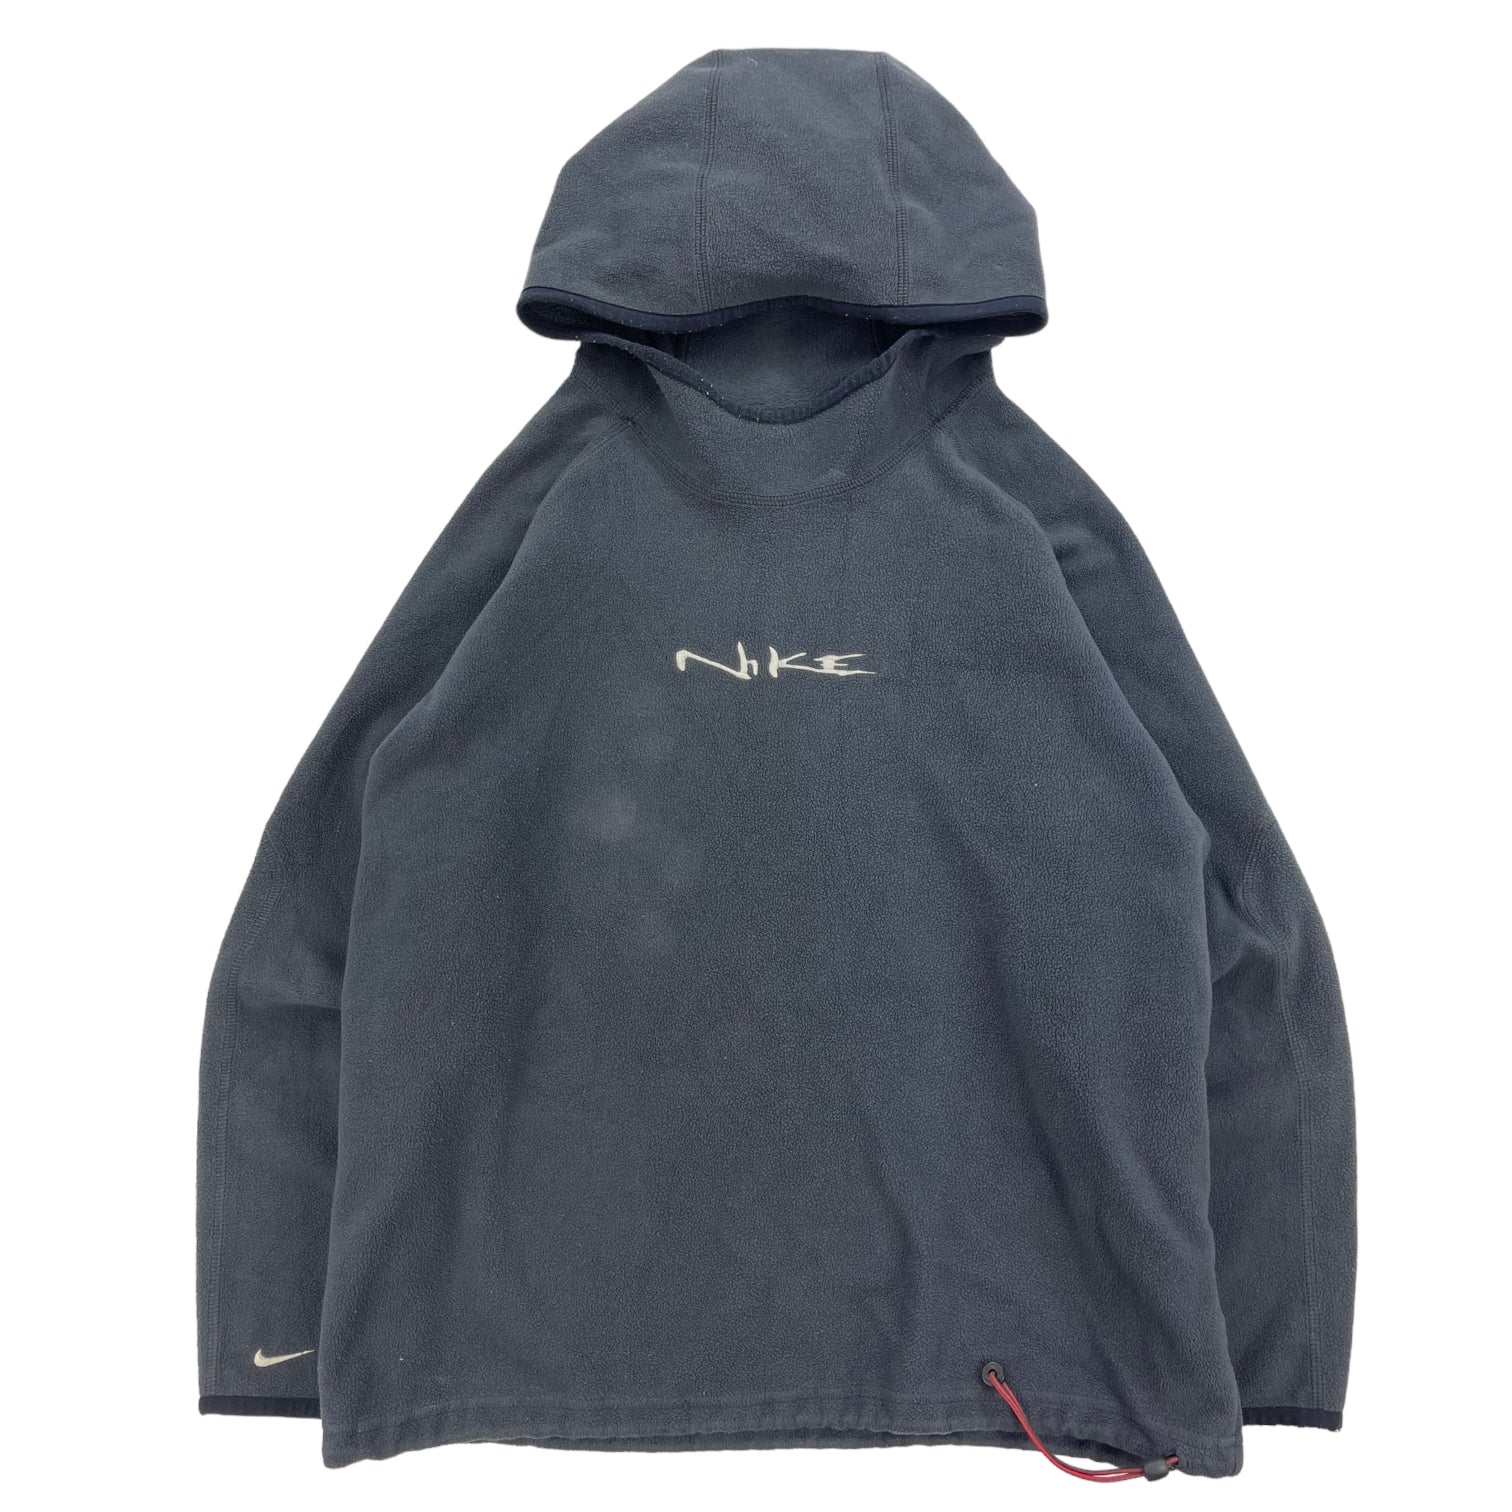 2000s Nike fleece pullover balaclava hoodie